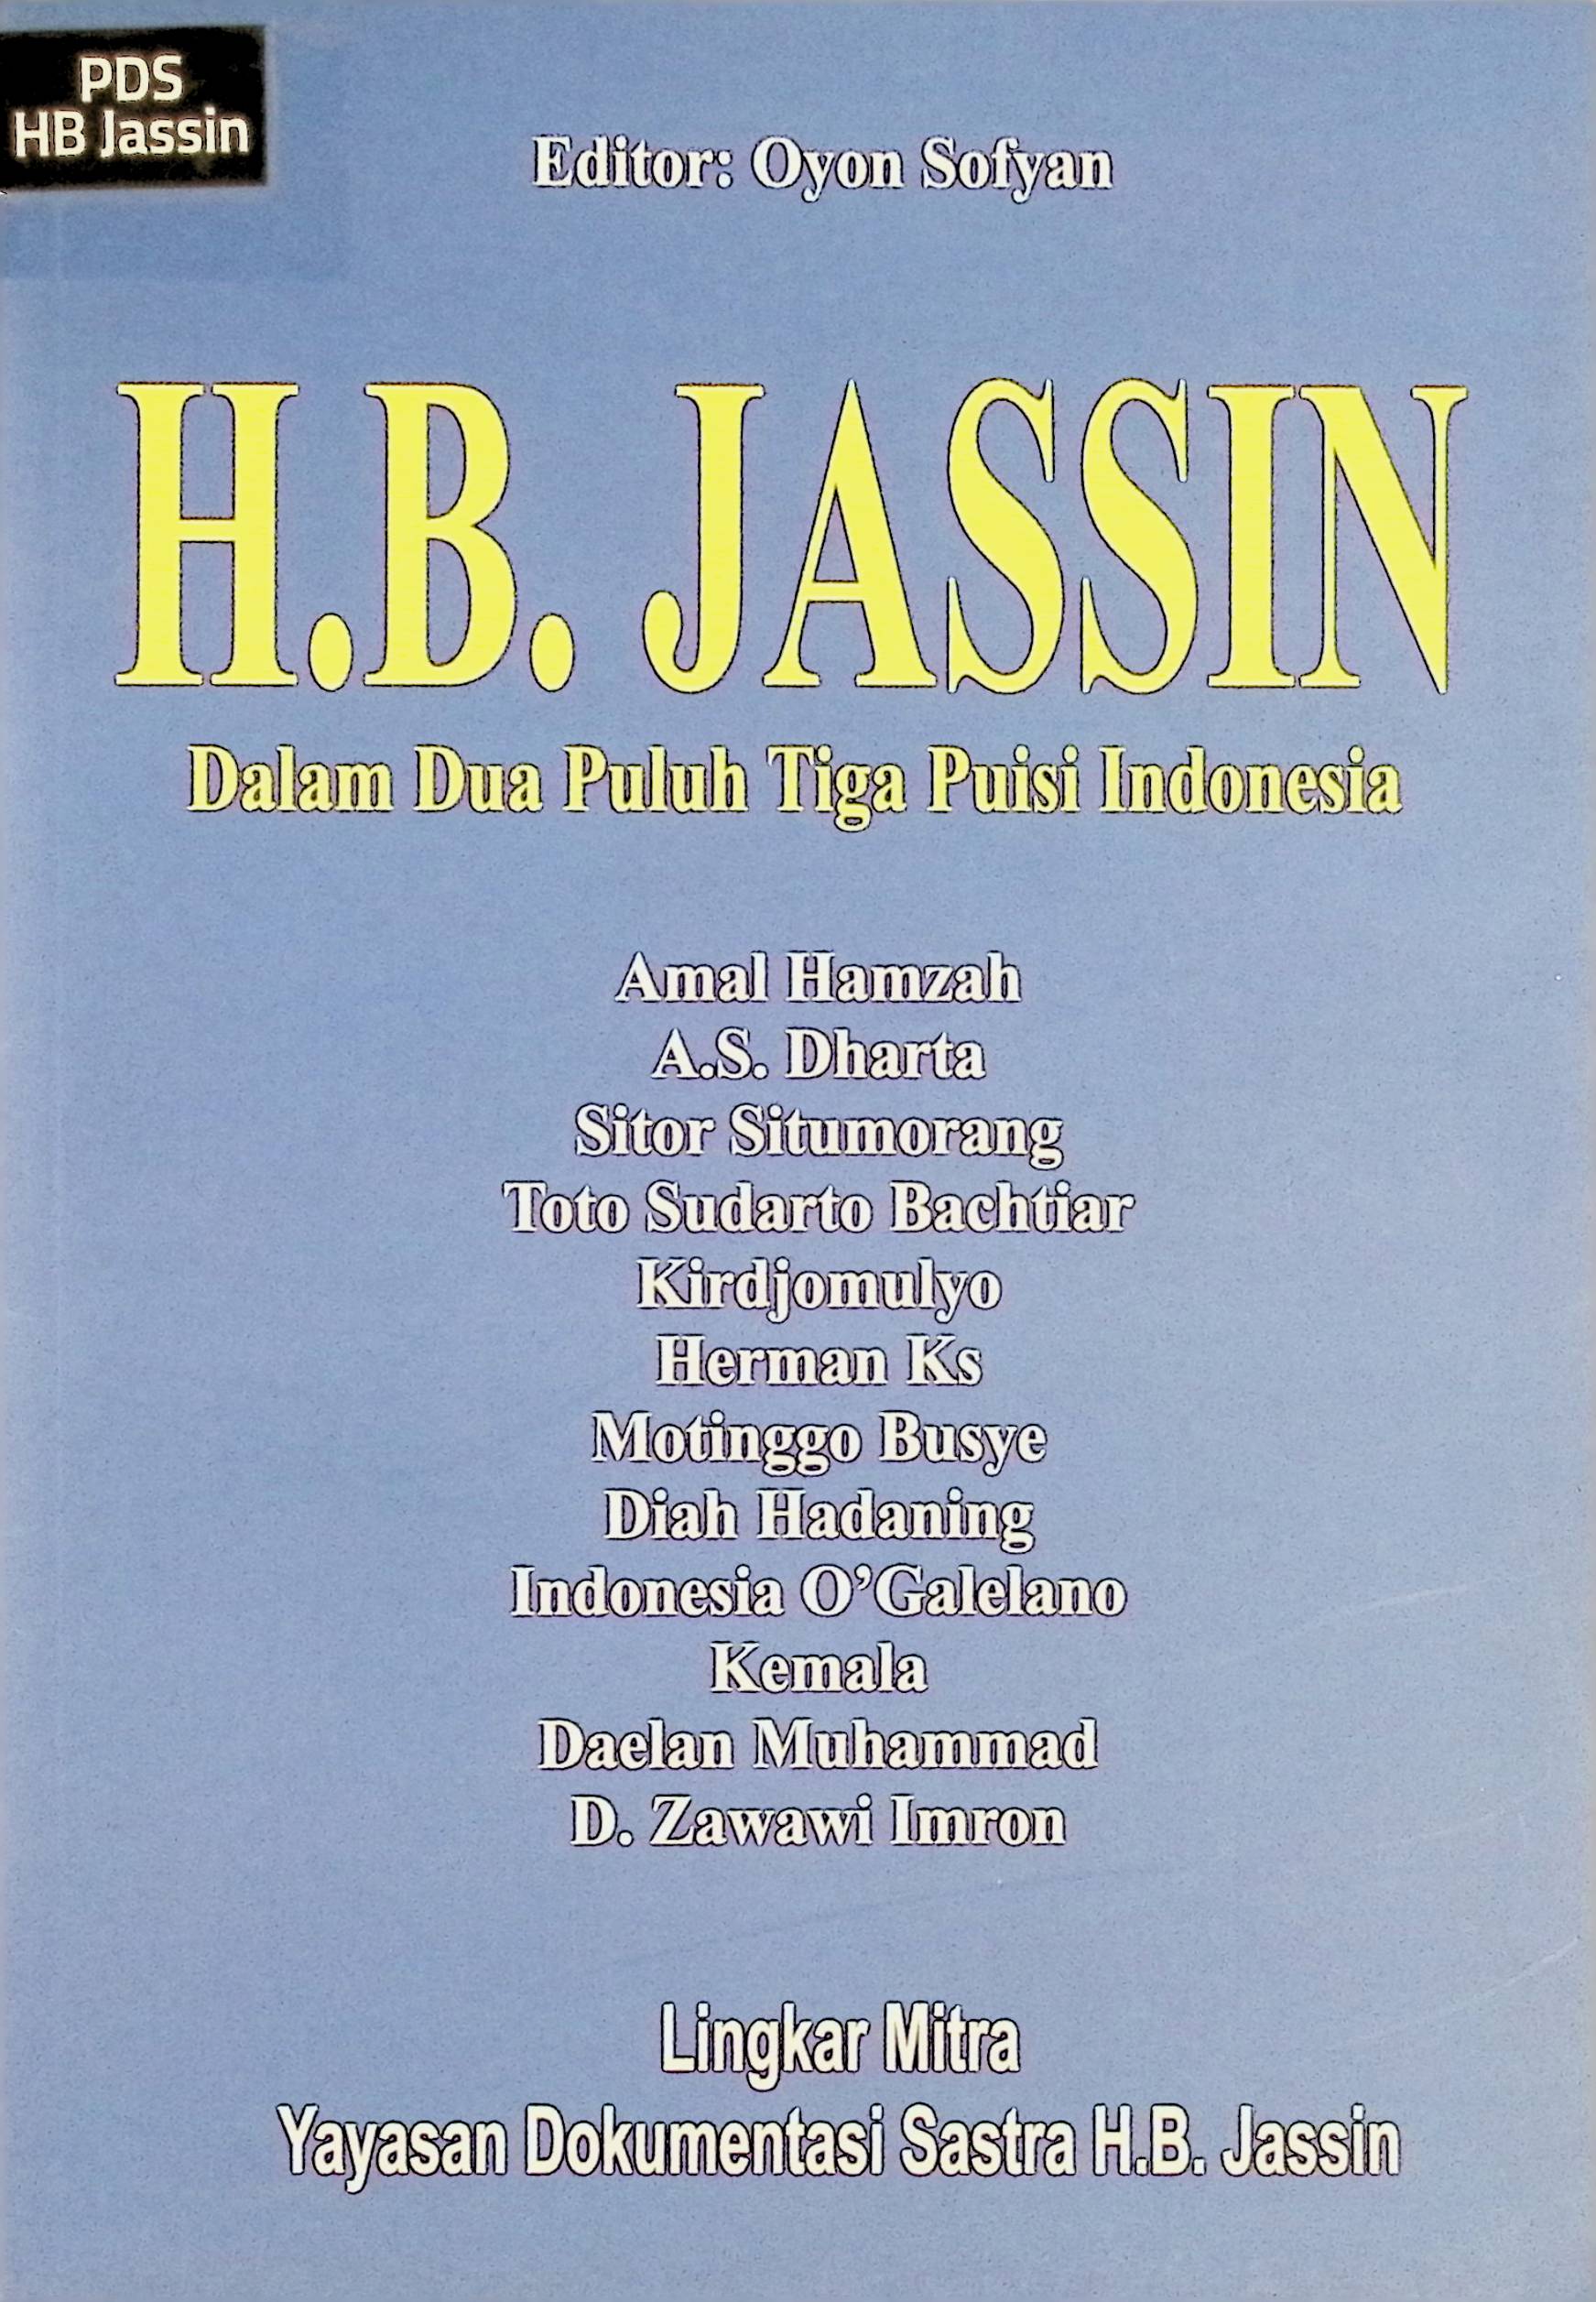 HB Jassin dalam Dua Puluh Tiga Puisi Indonesia